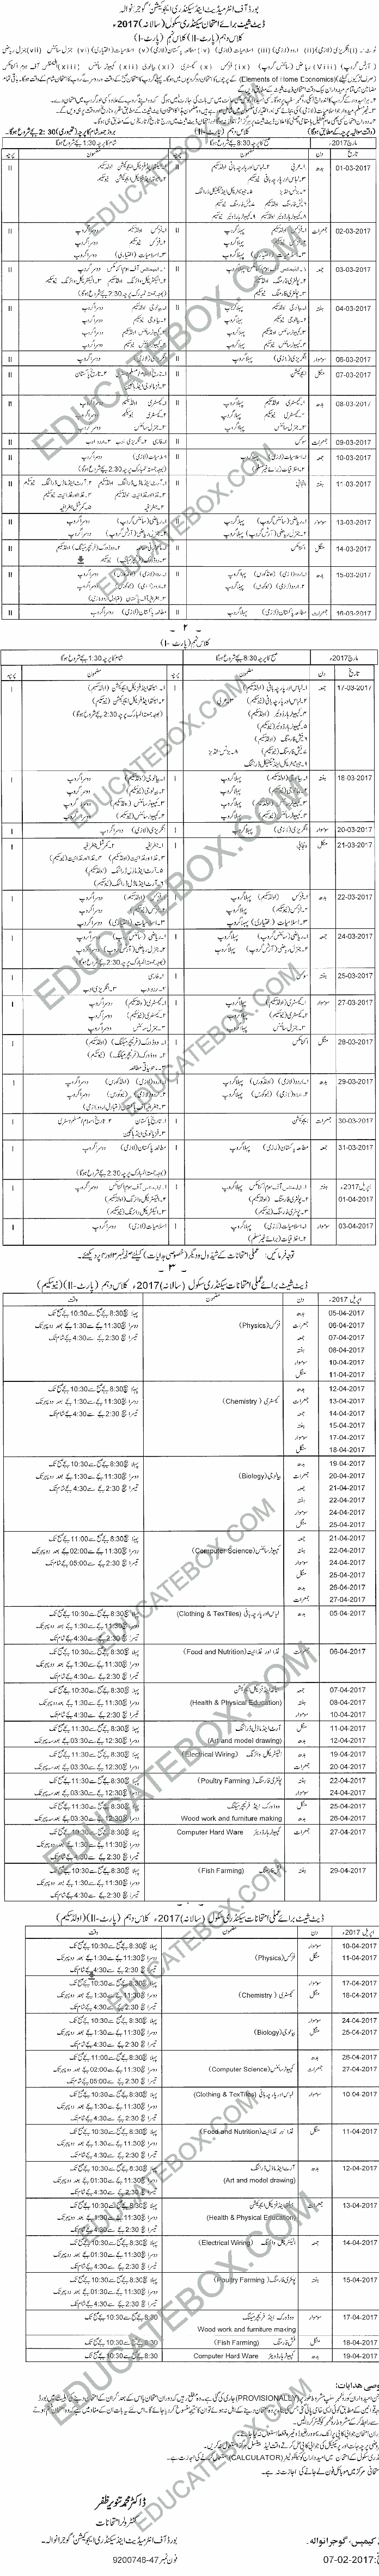 9th 10th Date Sheet 2017 gujranwala Board Matric exams